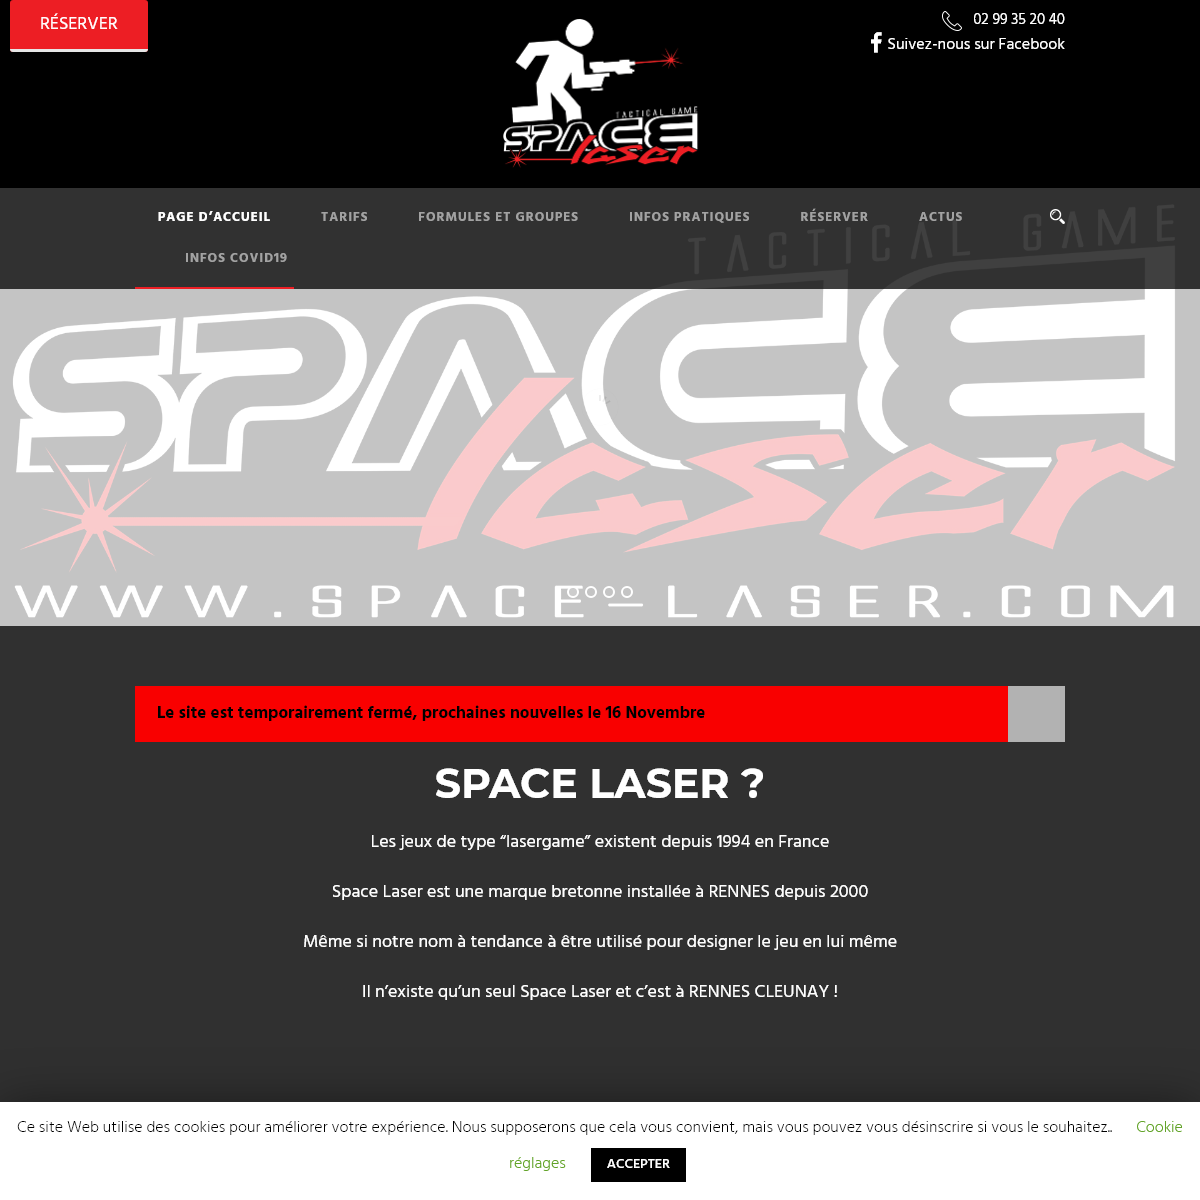 A complete backup of space-laser.com